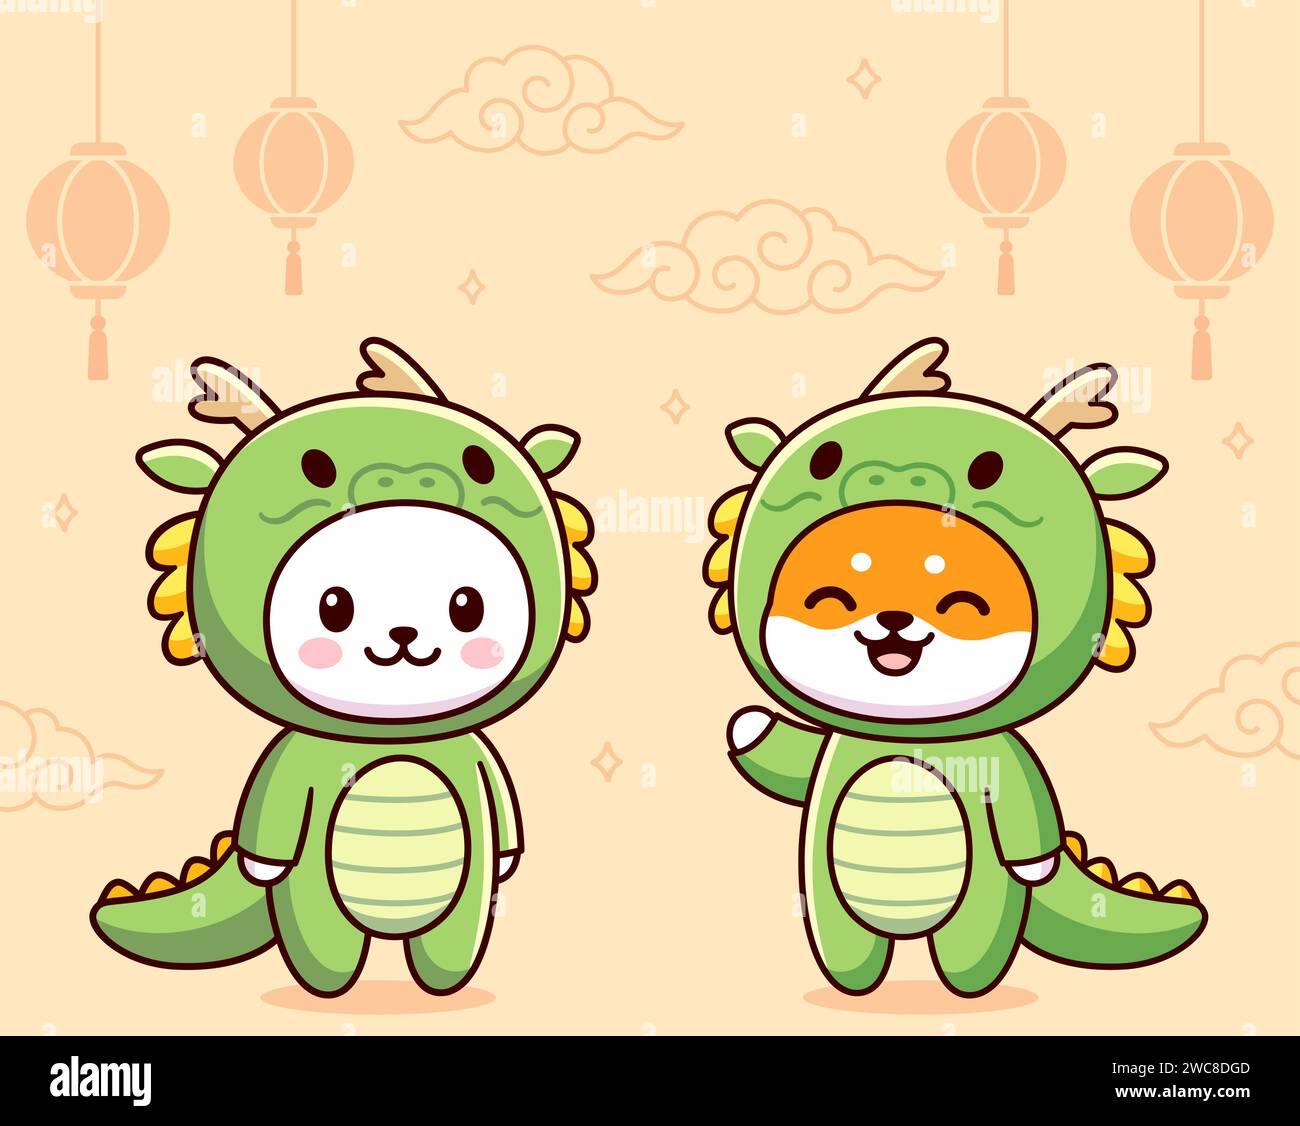 Kawaii cat and dog in green dragon costumes. Chinese New Year greeting card. Cute cartoon vector clip art illustration. Stock Vector